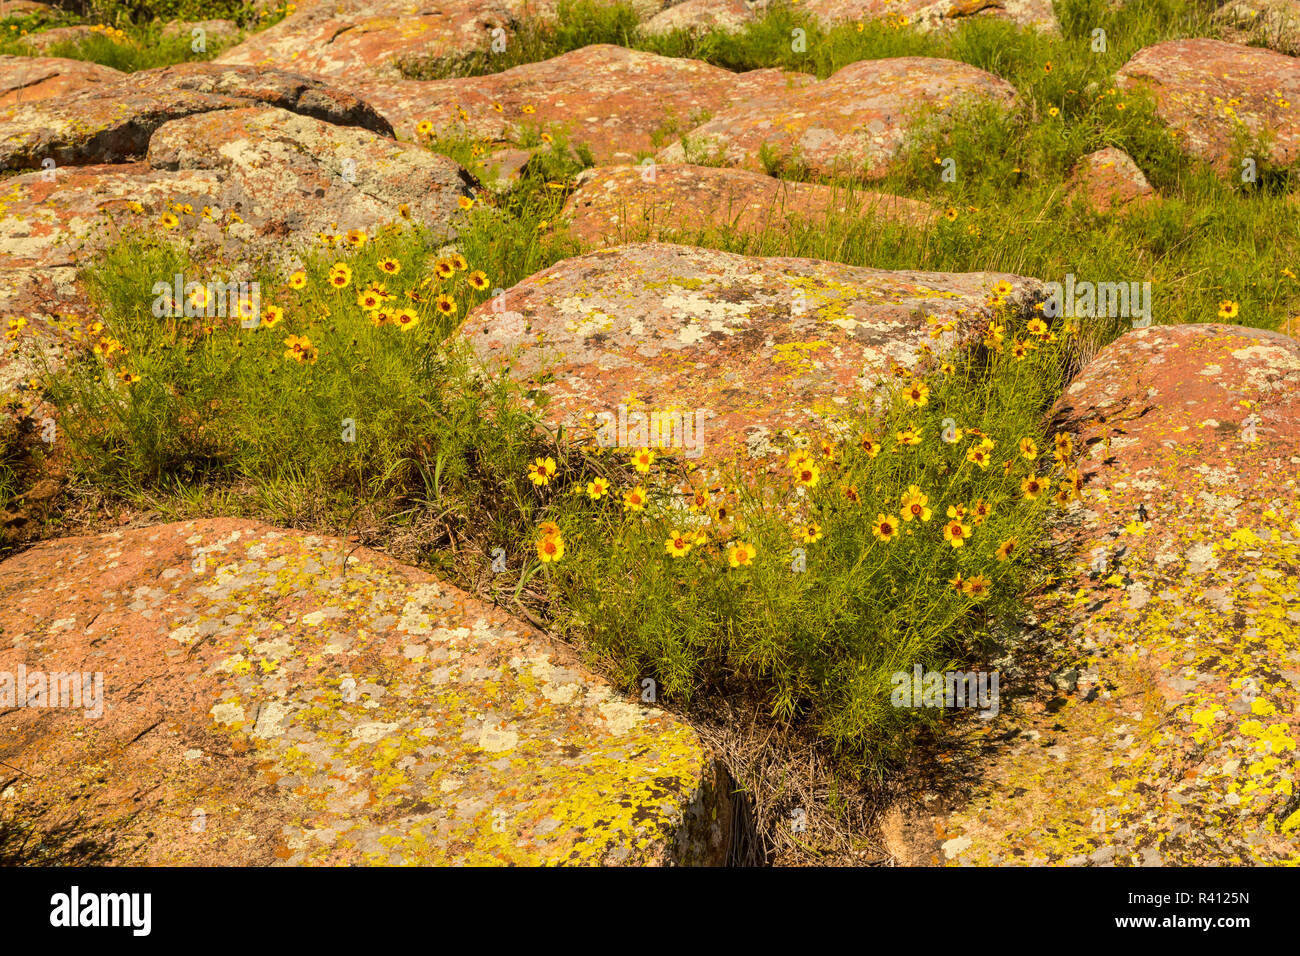 USA, Oklahoma, Wichita Mountains National Wildlife Refuge. Wildflowers amid boulders. Stock Photo